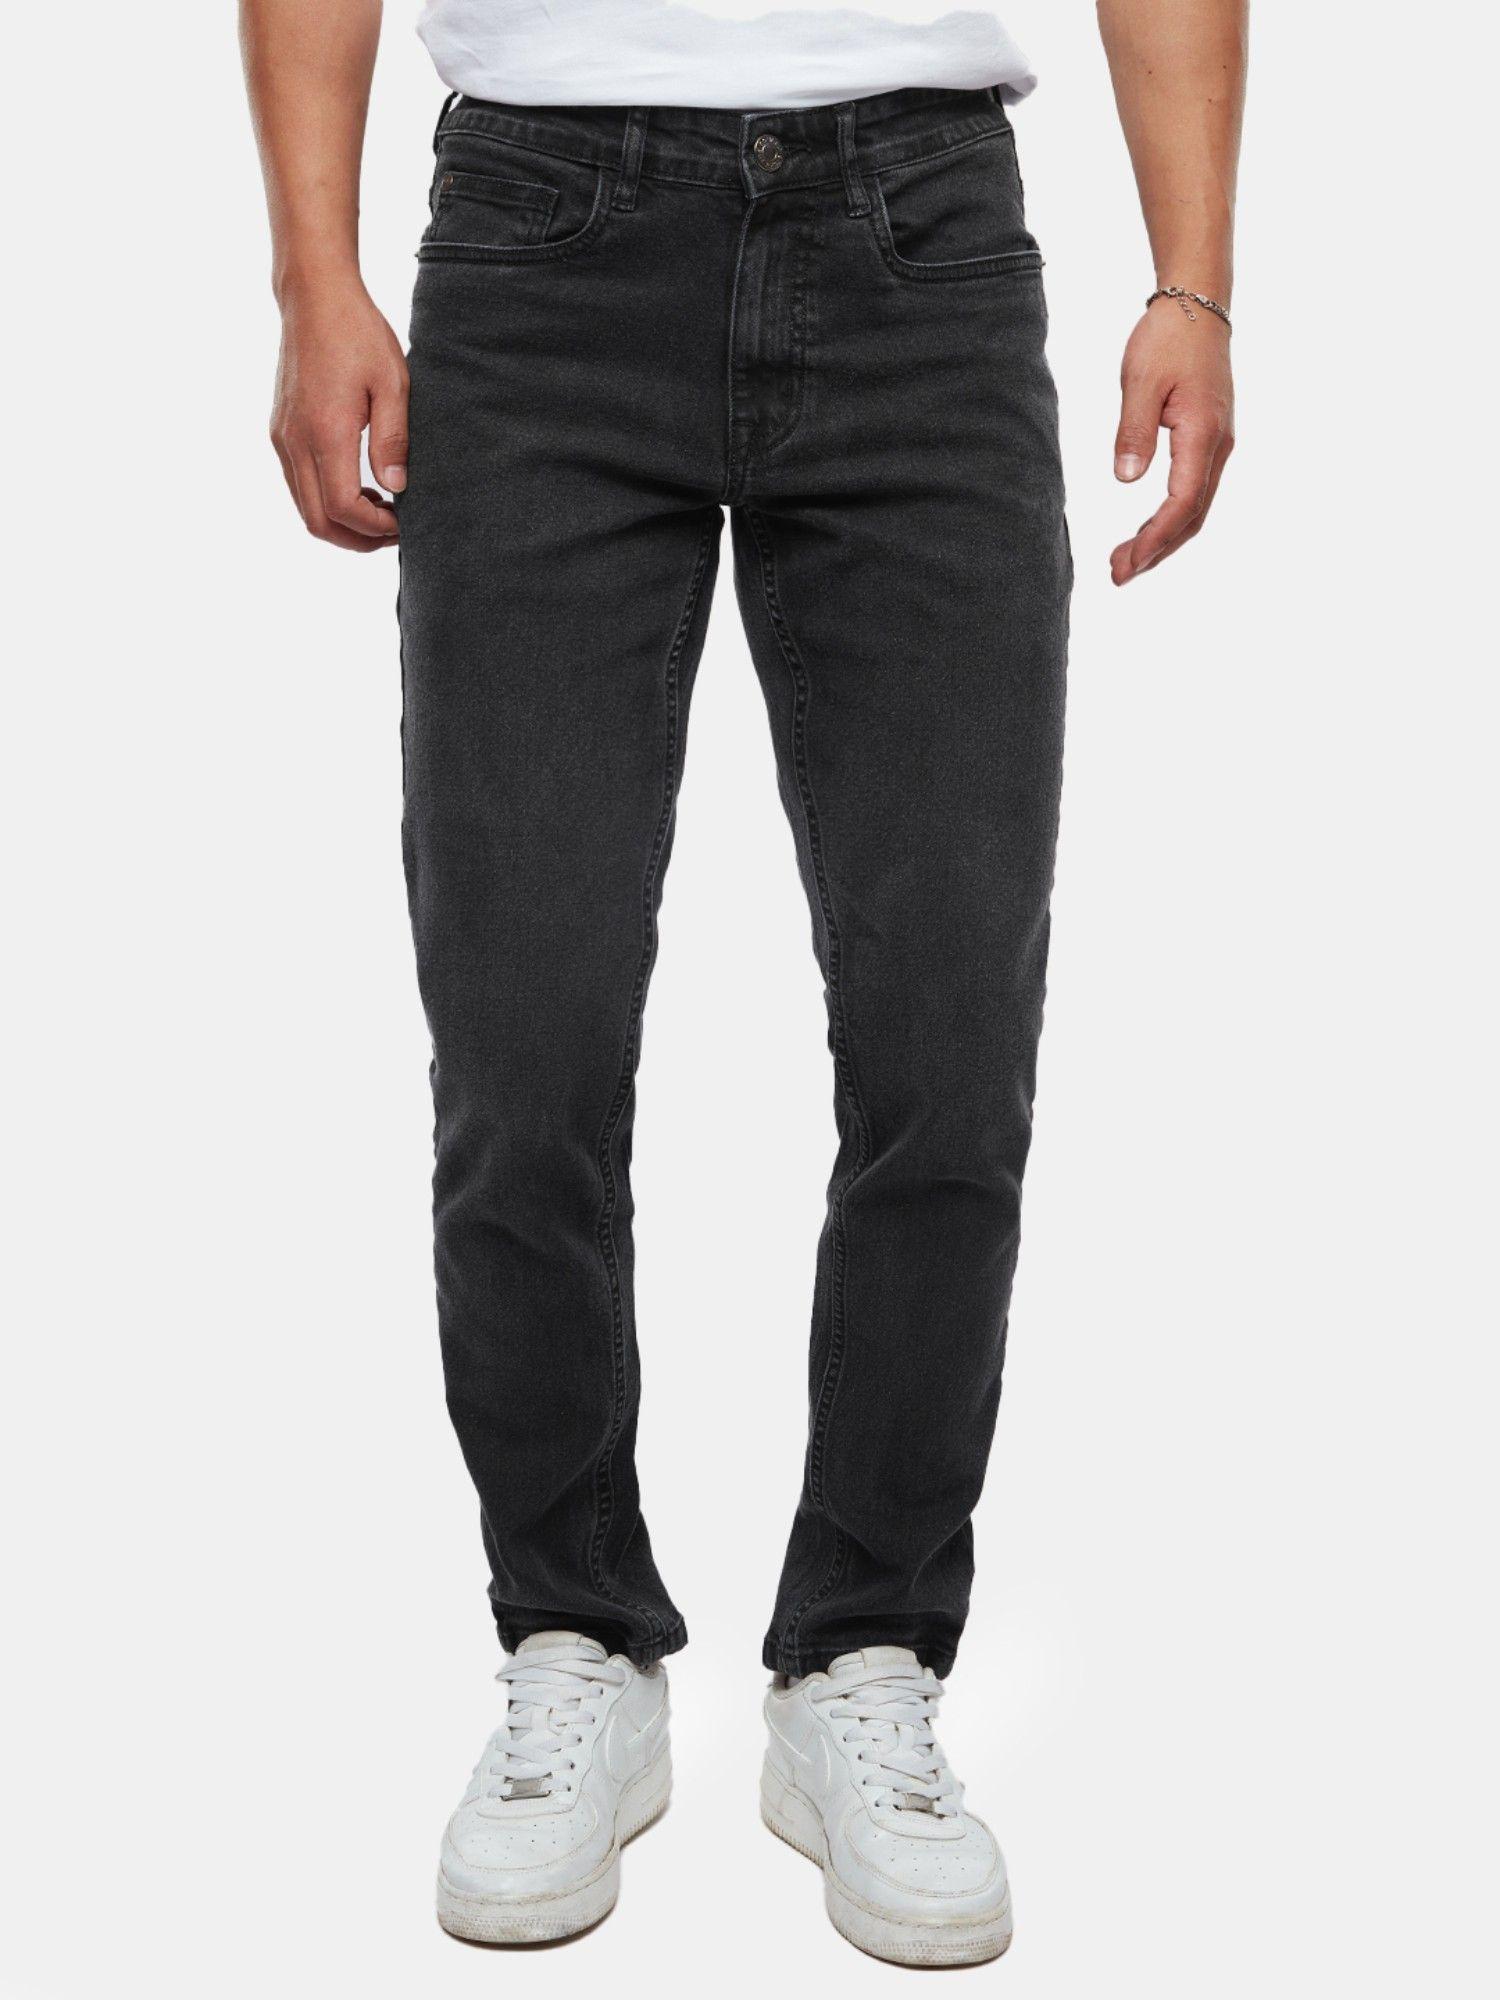 solids : ash grey slim fit men jeans